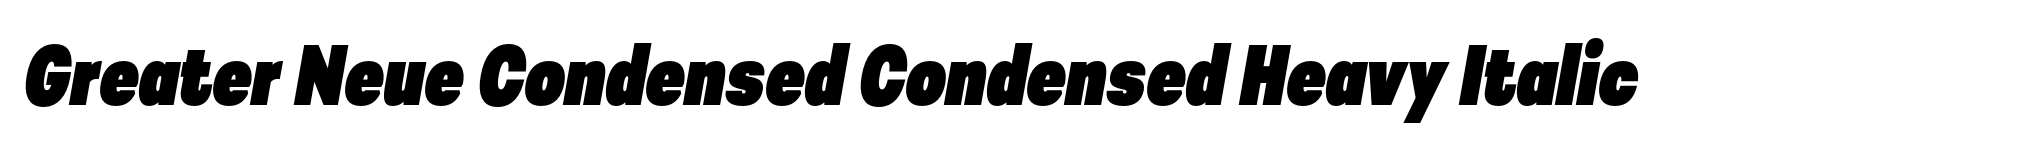 Greater Neue Condensed Condensed Heavy Italic image